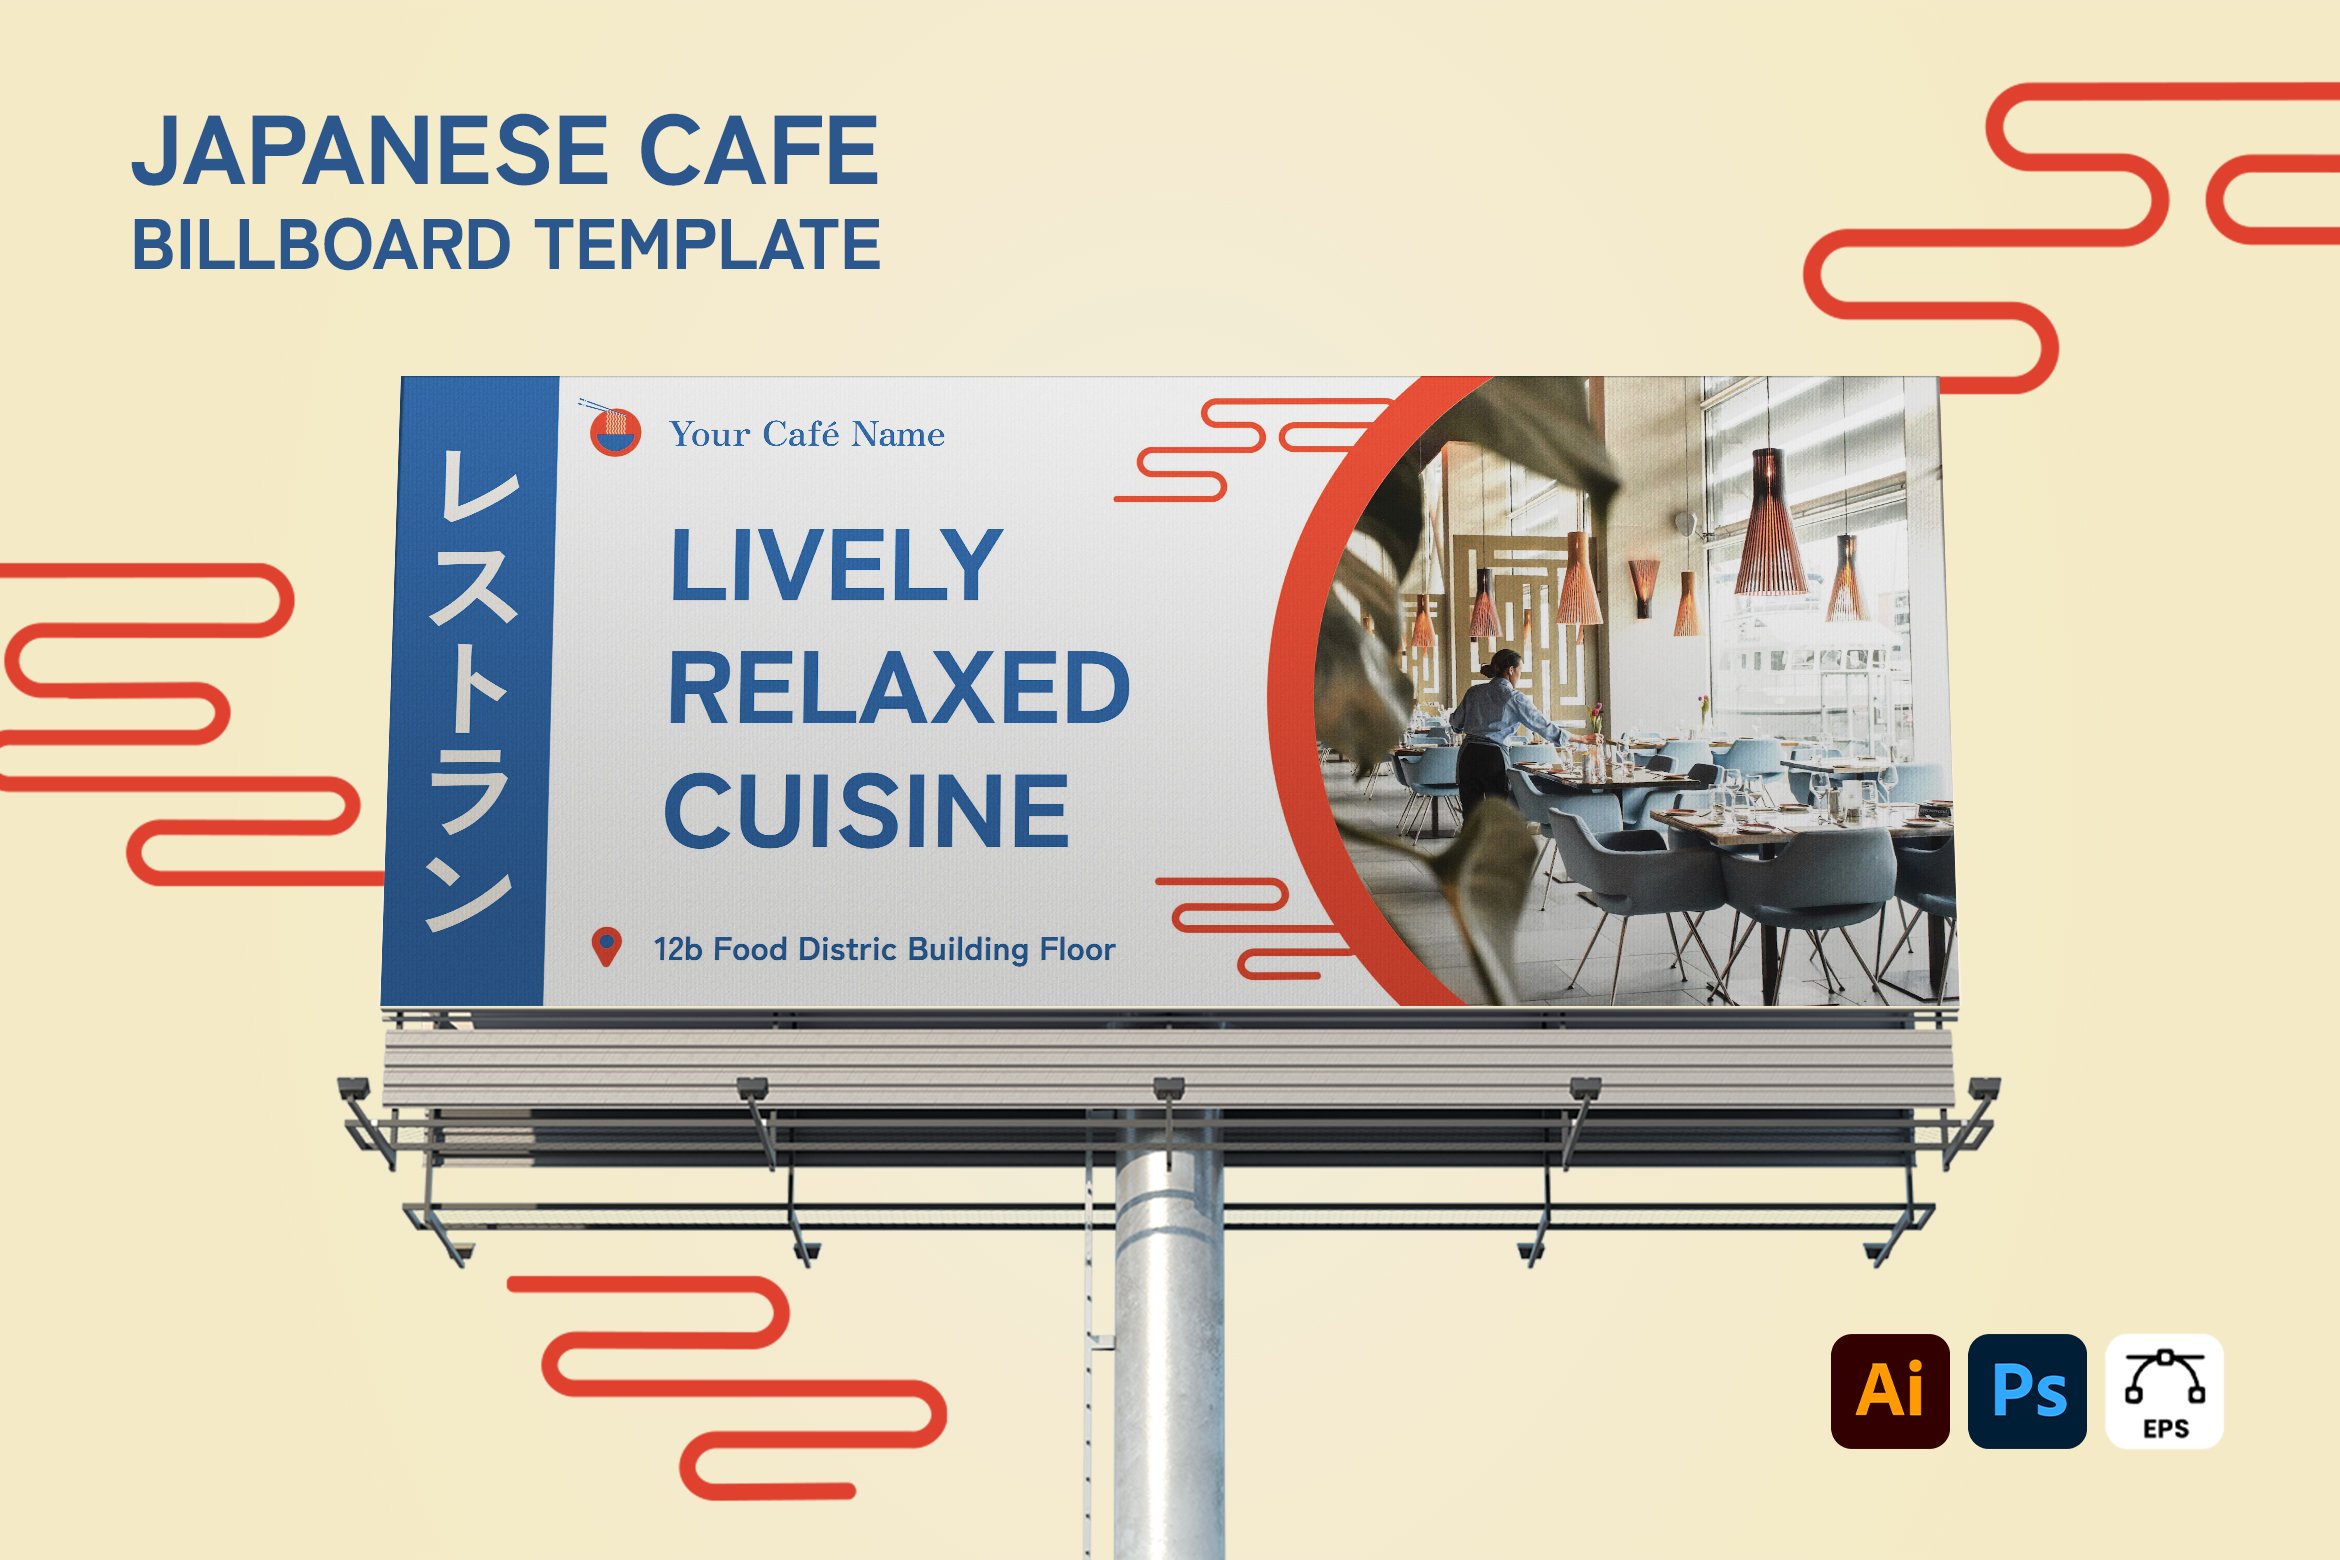 Japanese Cafe Billboard cover image.